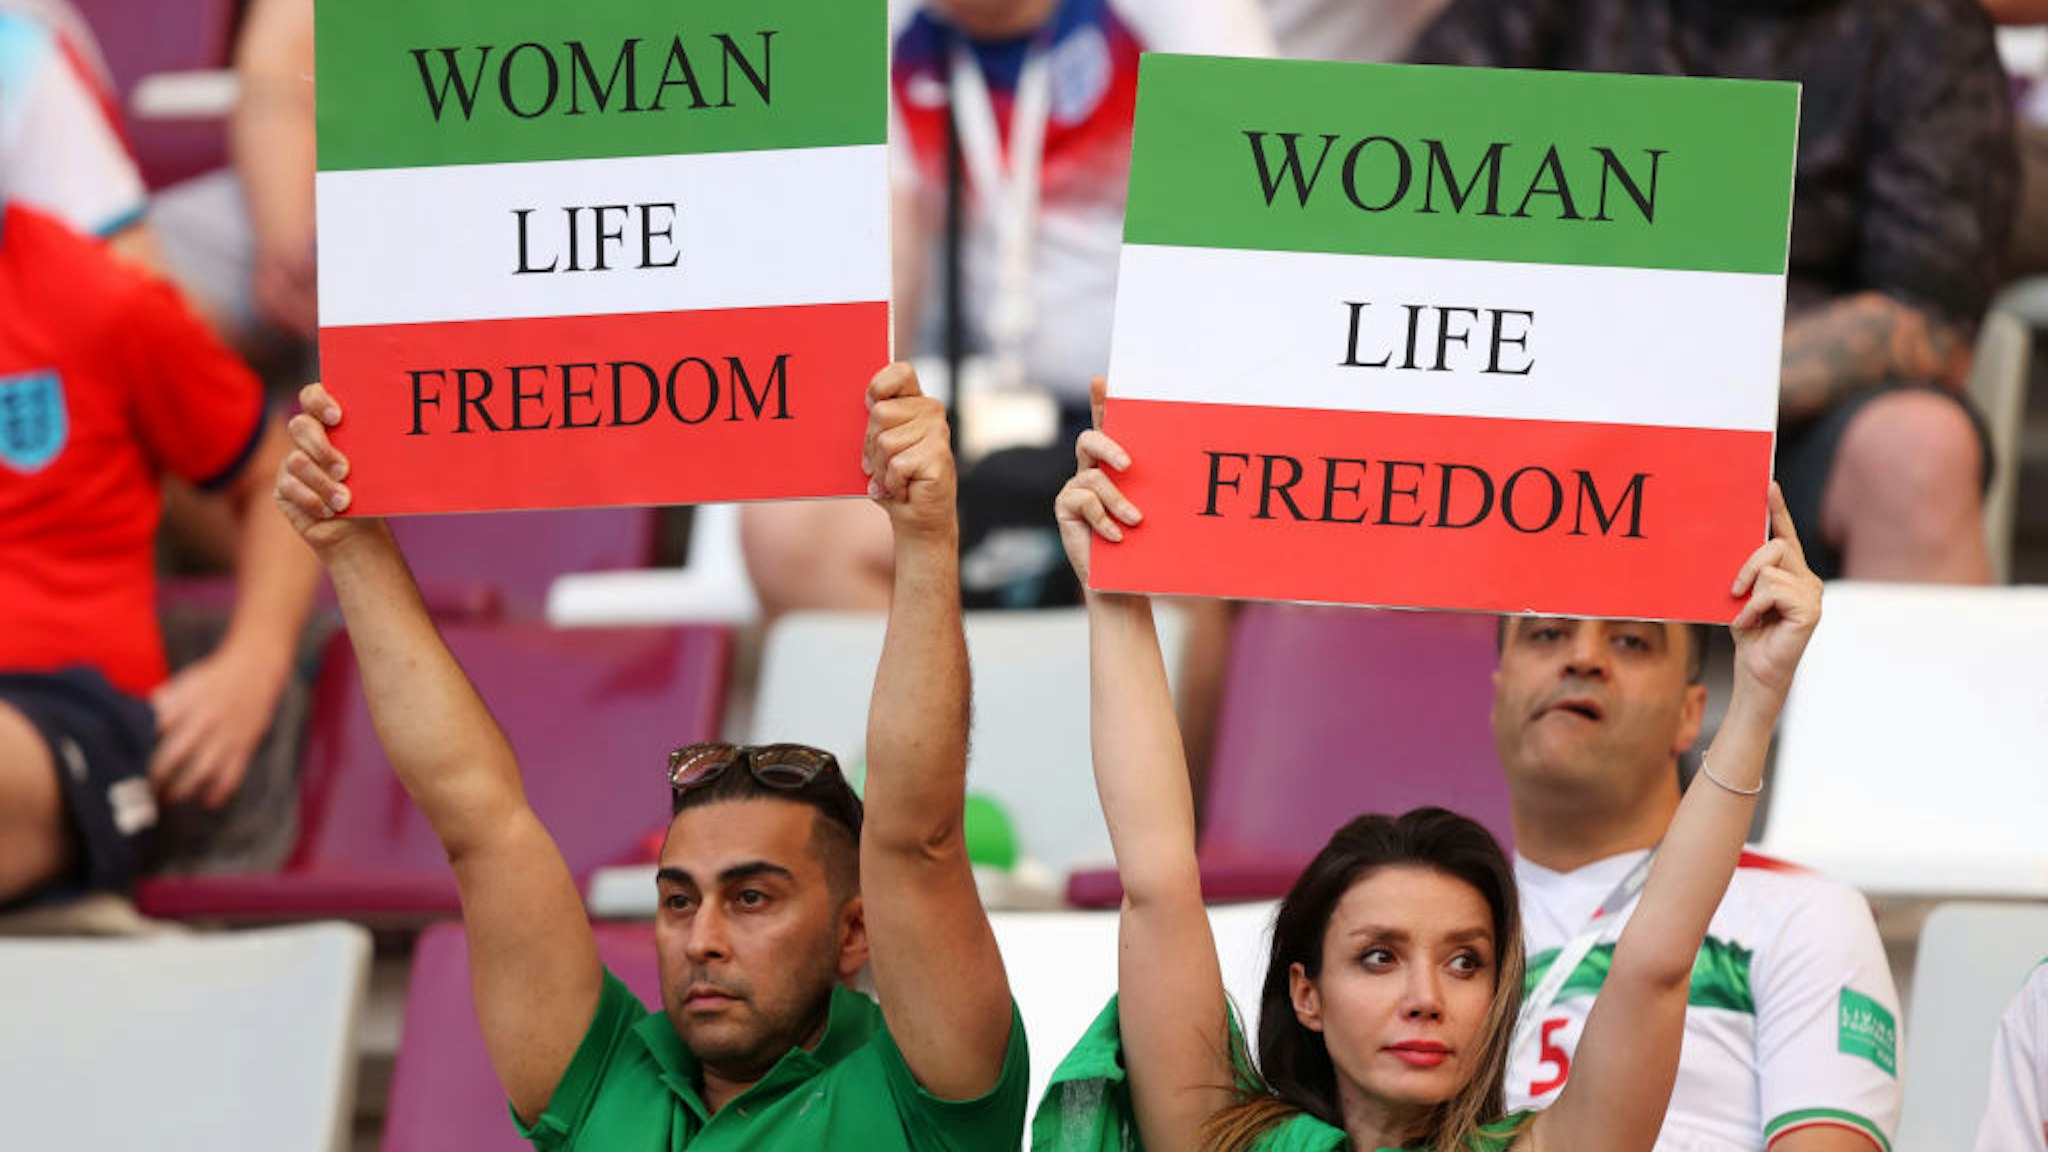 DOHA, QATAR - NOVEMBER 21: Iranian fans hold up signs advocating for women's rights prior to the FIFA World Cup Qatar 2022 Group B match between England and IR Iran at Khalifa International Stadium on November 21, 2022 in Doha, Qatar. (Photo by